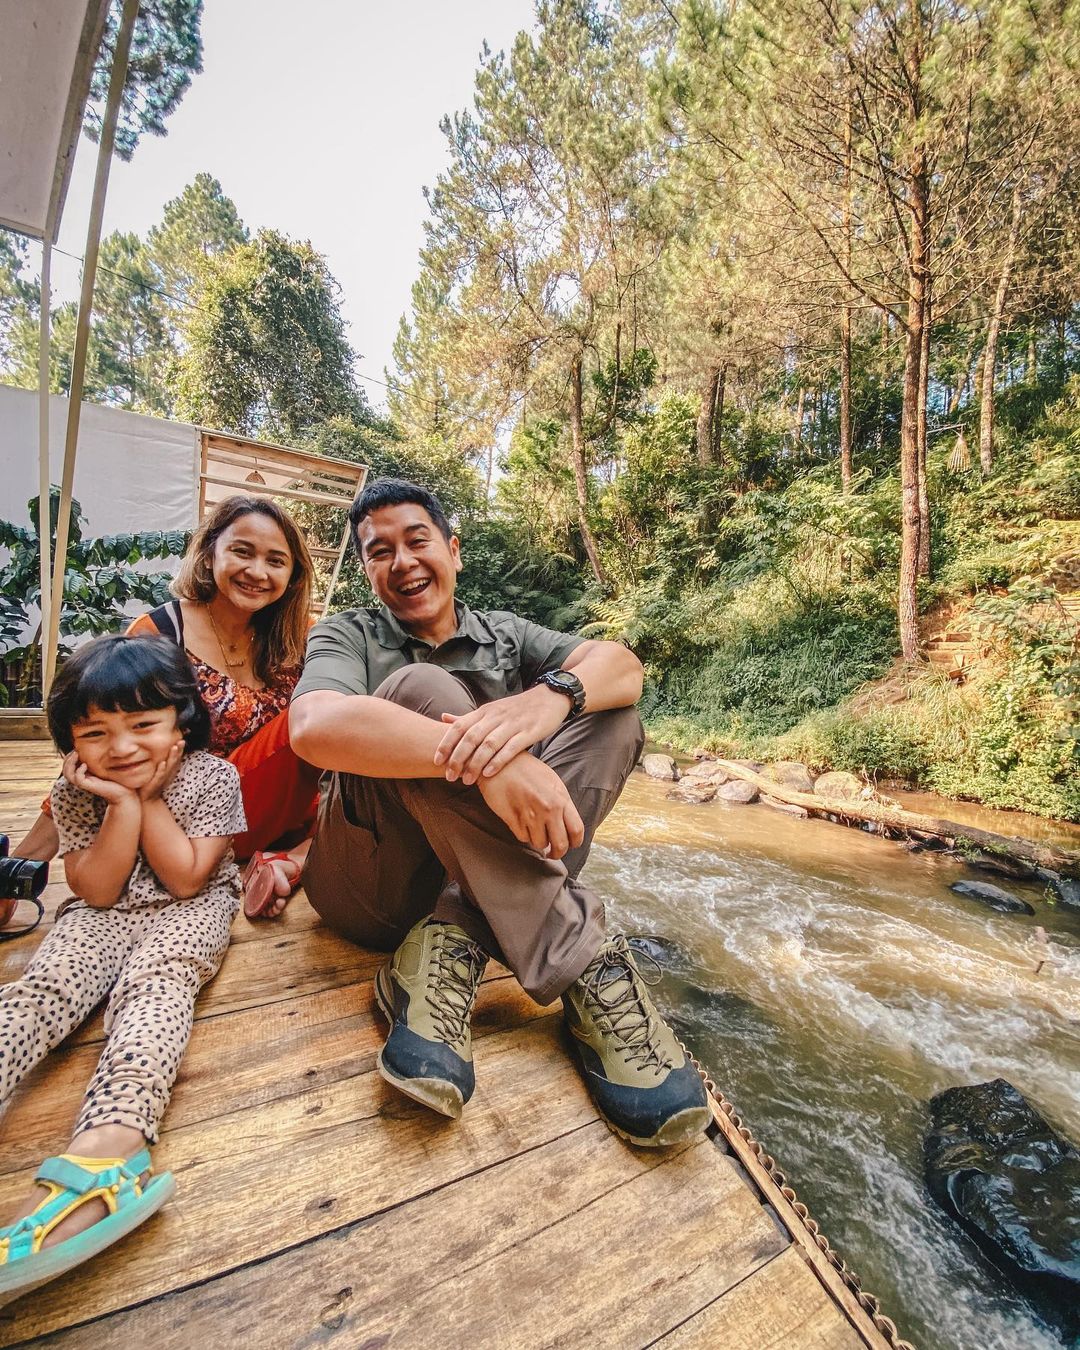 Review Luxury Camp Riverside Pangalengan By Horison Image From @malvinofajaro